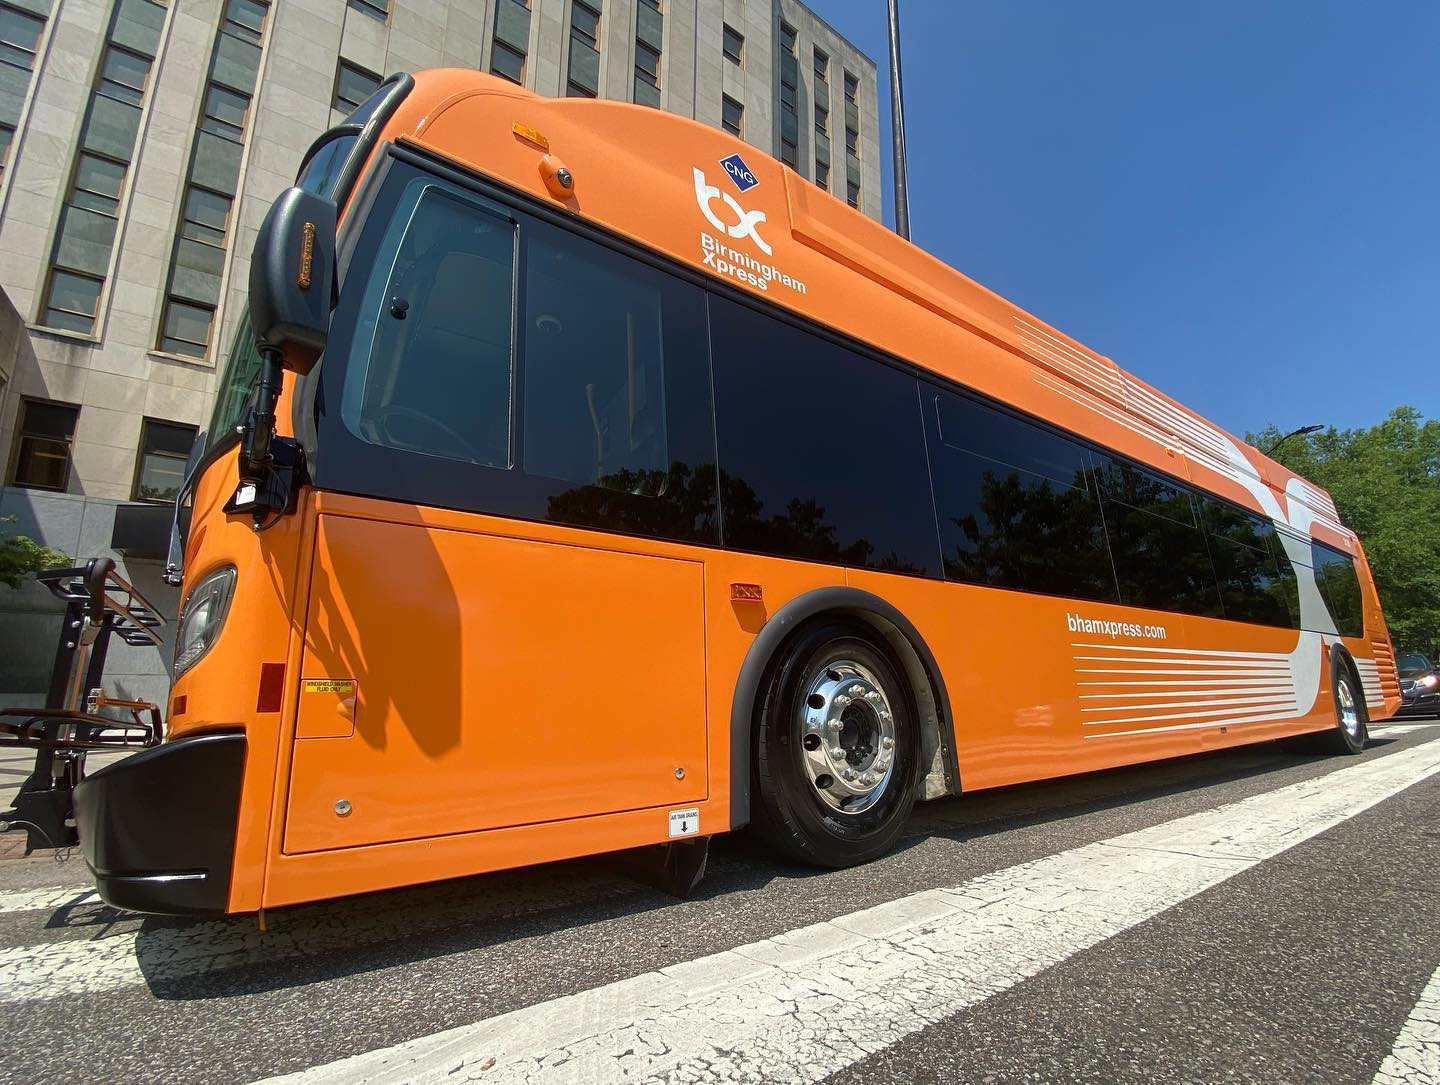 Birmingham Rapid Transit buses bring speedy travel to The Magic City